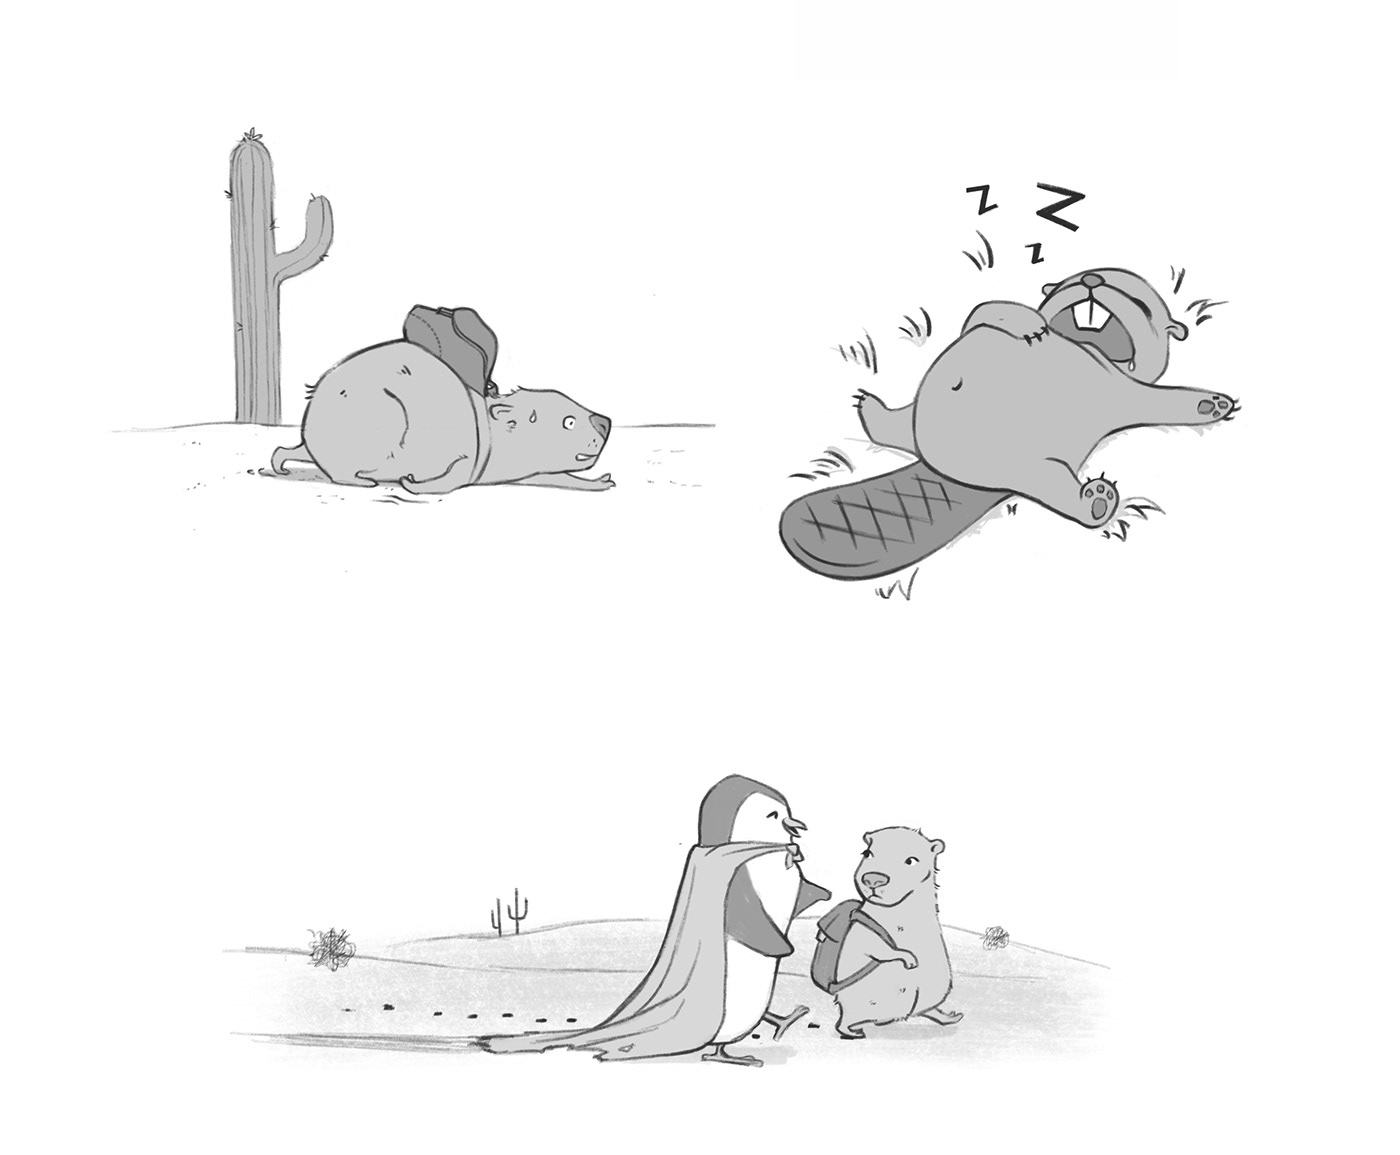 cartoon digital illustration Character design  kidlit kidlitillustration kidlitart capybara illustrations cute illustration book illustrations